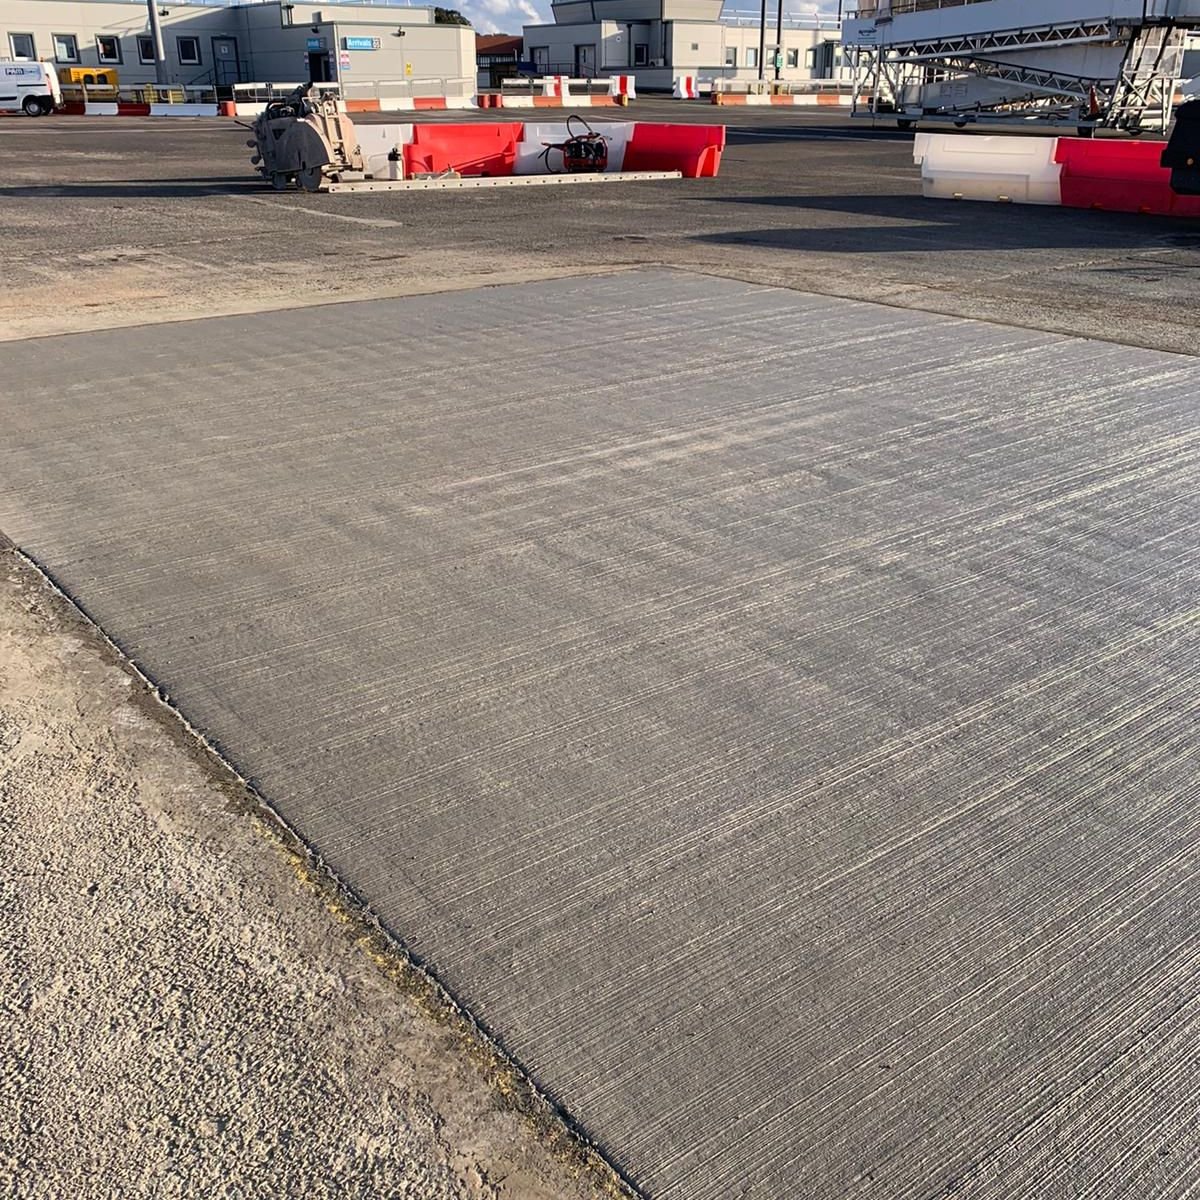 LAML Glasgow Prestwick Airport - General Case Study Image - Concrete Bay Repair  Replacement.jpg